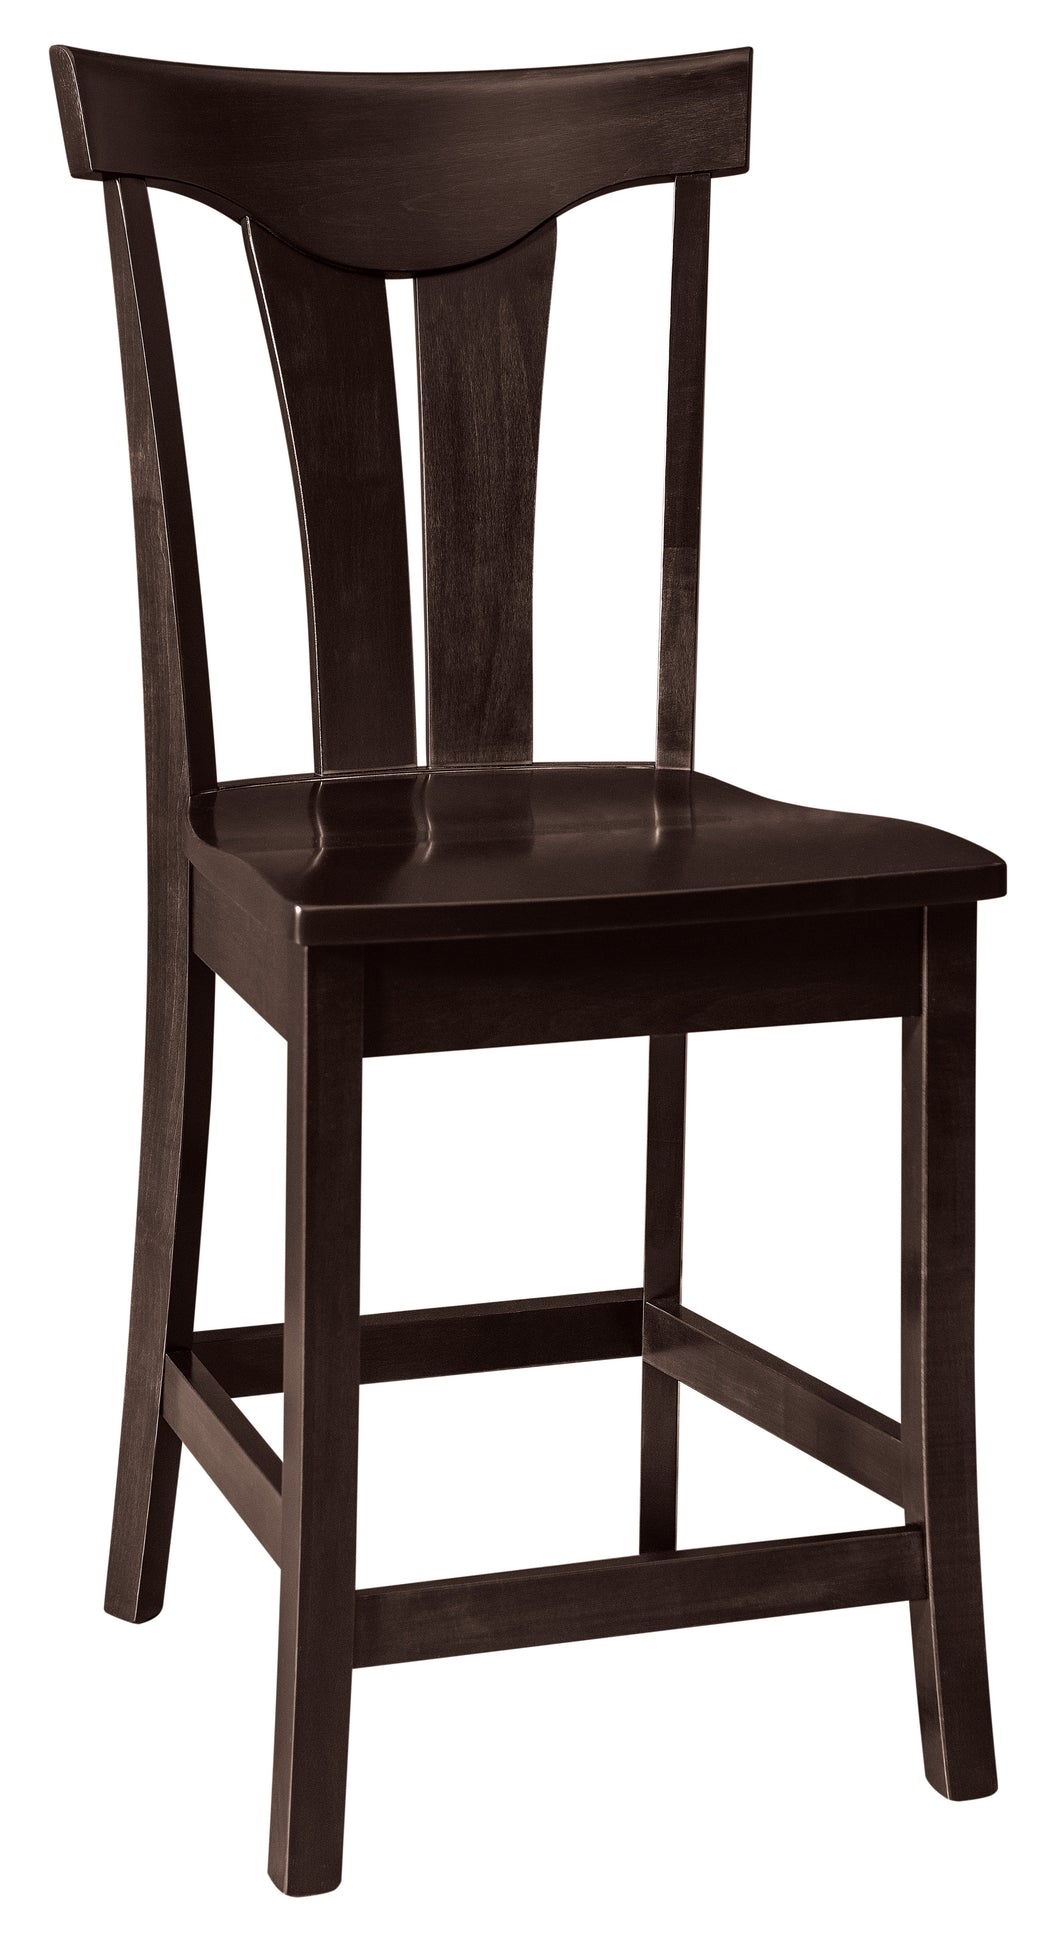 Tifton Stationary Bar Chair